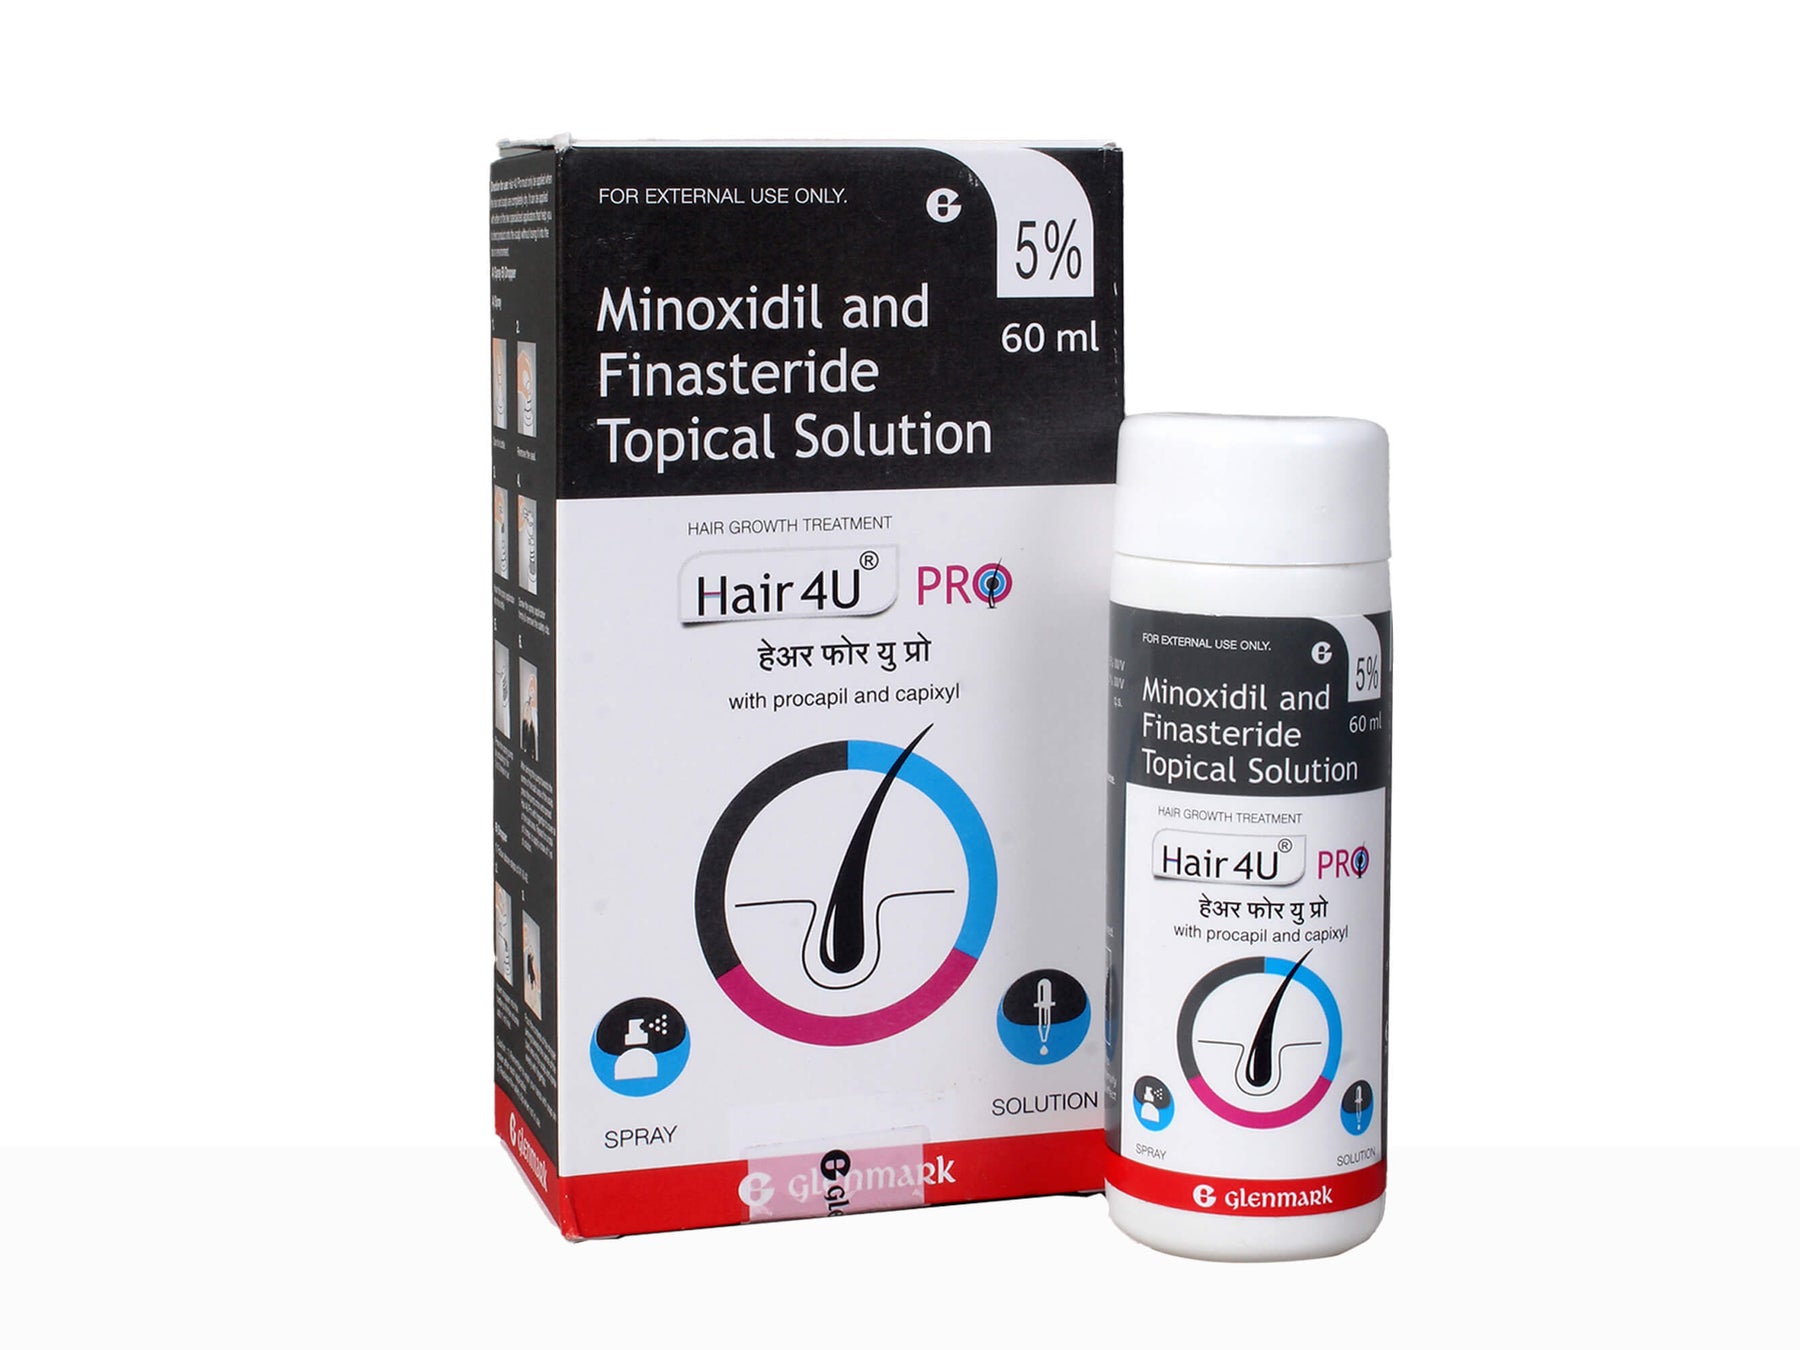 HAIR 4U F 5 SPRAYSolution 60ml  Buy Medicines online at Best Price from  Netmedscom